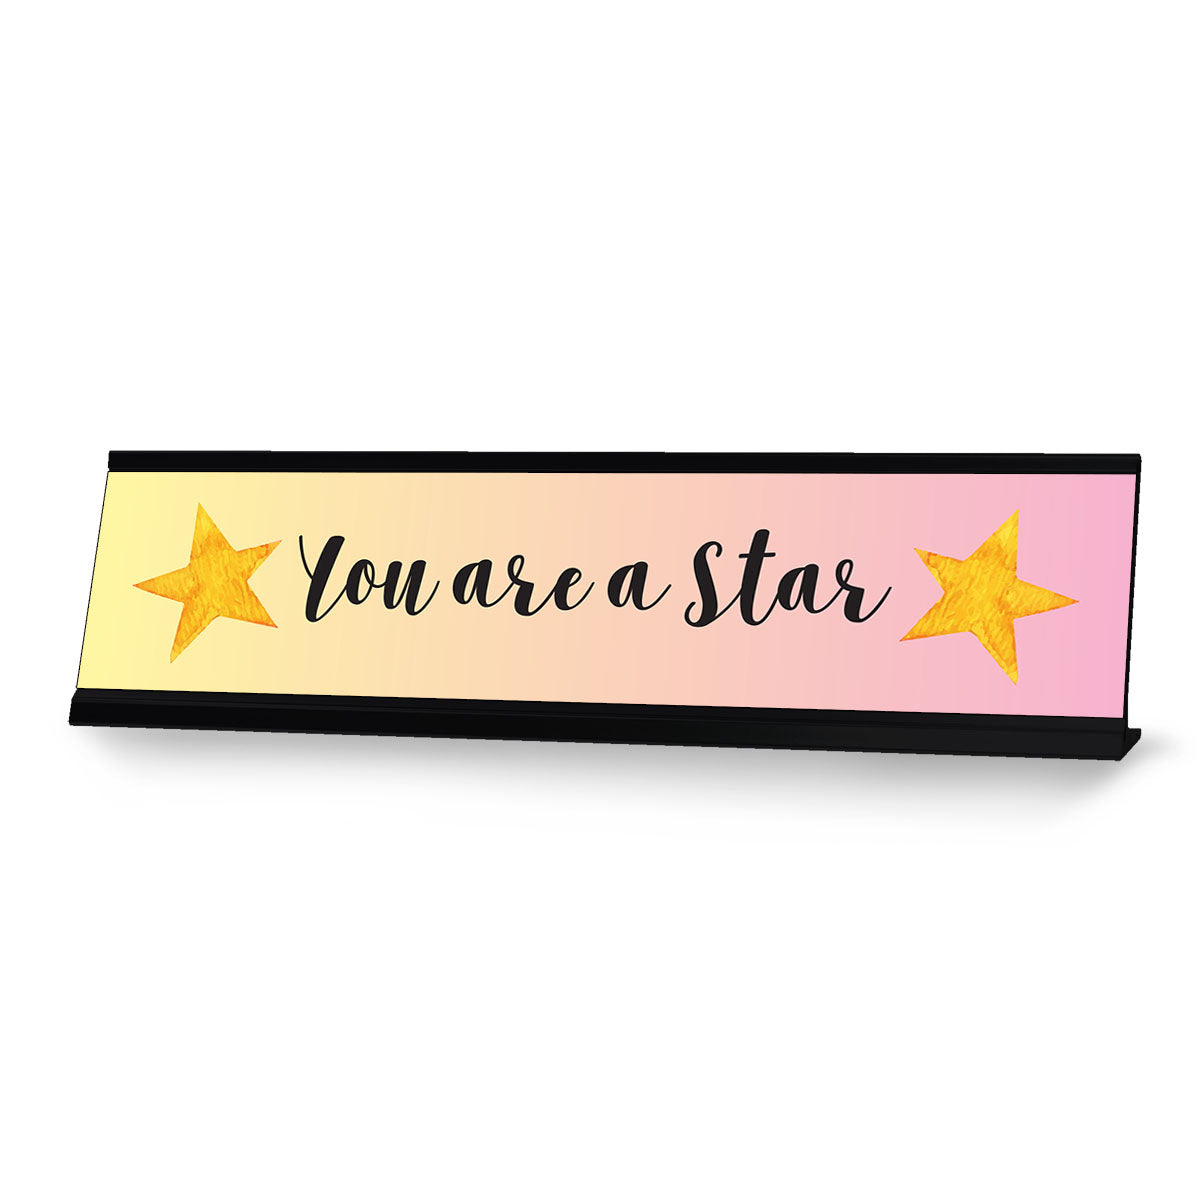 You are a star, Designer Desk Sign Nameplate (2 x 8")